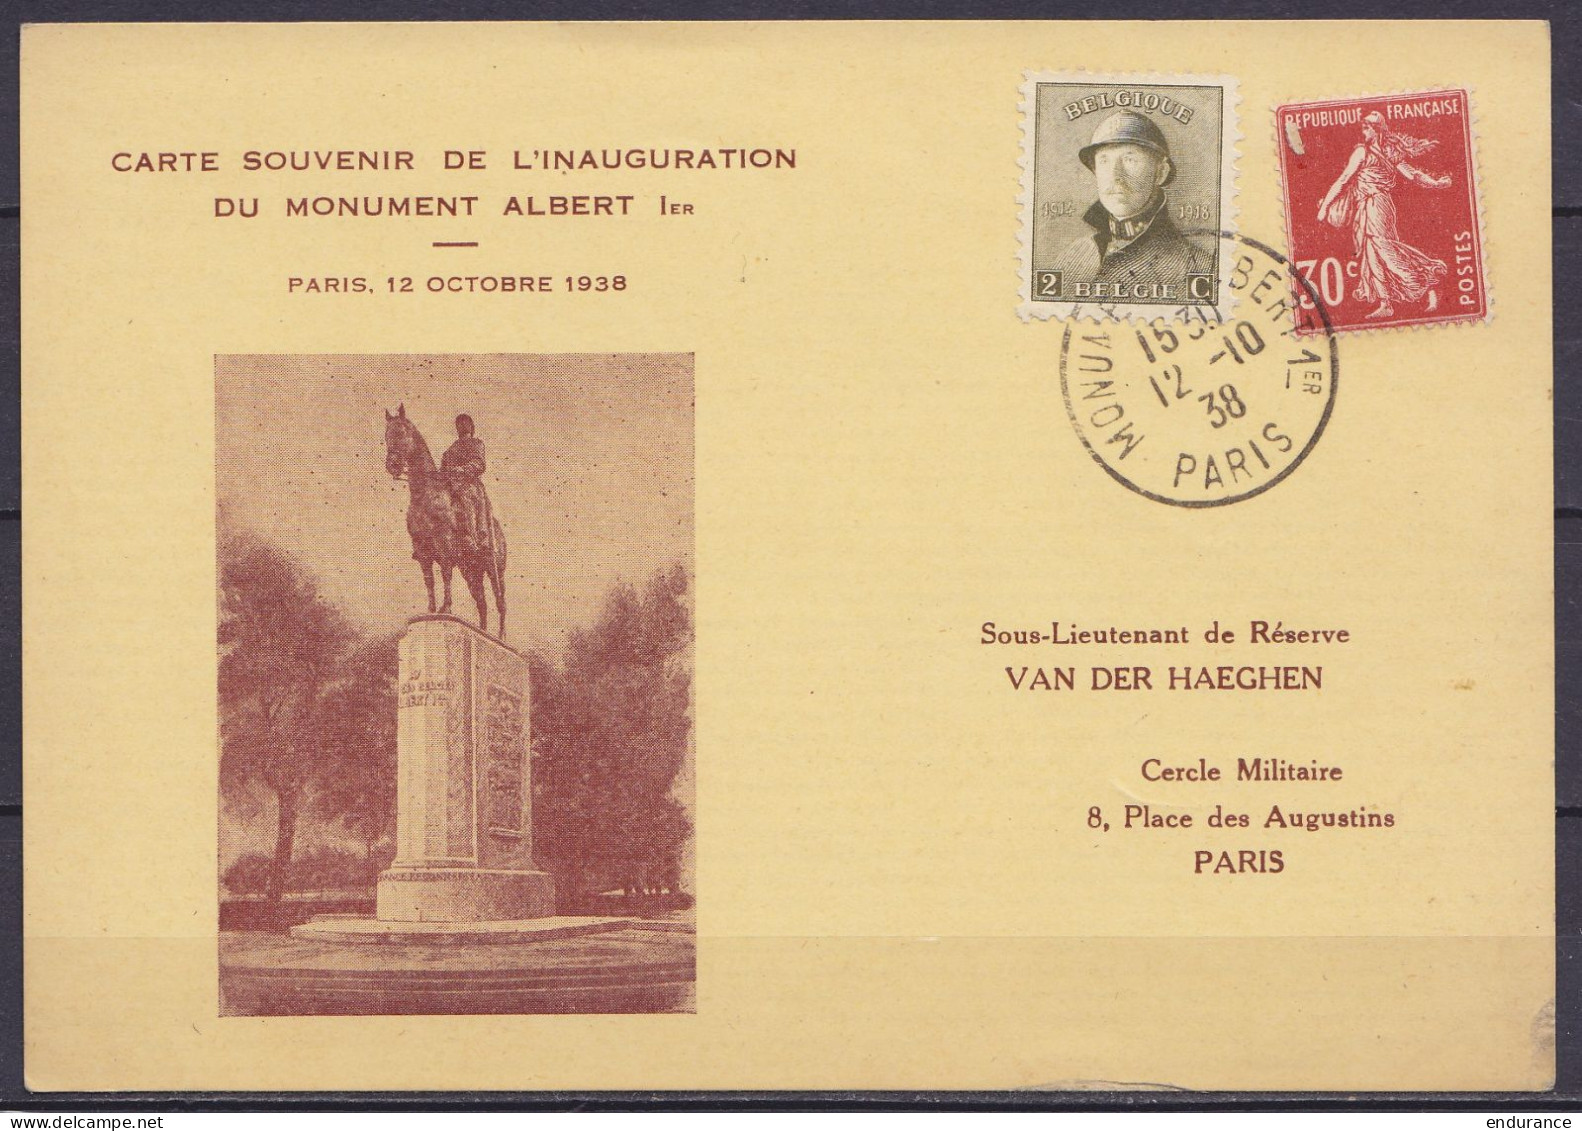 Carte Souvenir De L'inauguration Du Monument Albert 1e Affr. N°166 + Semeuse 30c Càd "MONUMENT ALBERT 1e /12-10-1938/ PA - 1919-1920  Cascos De Trinchera